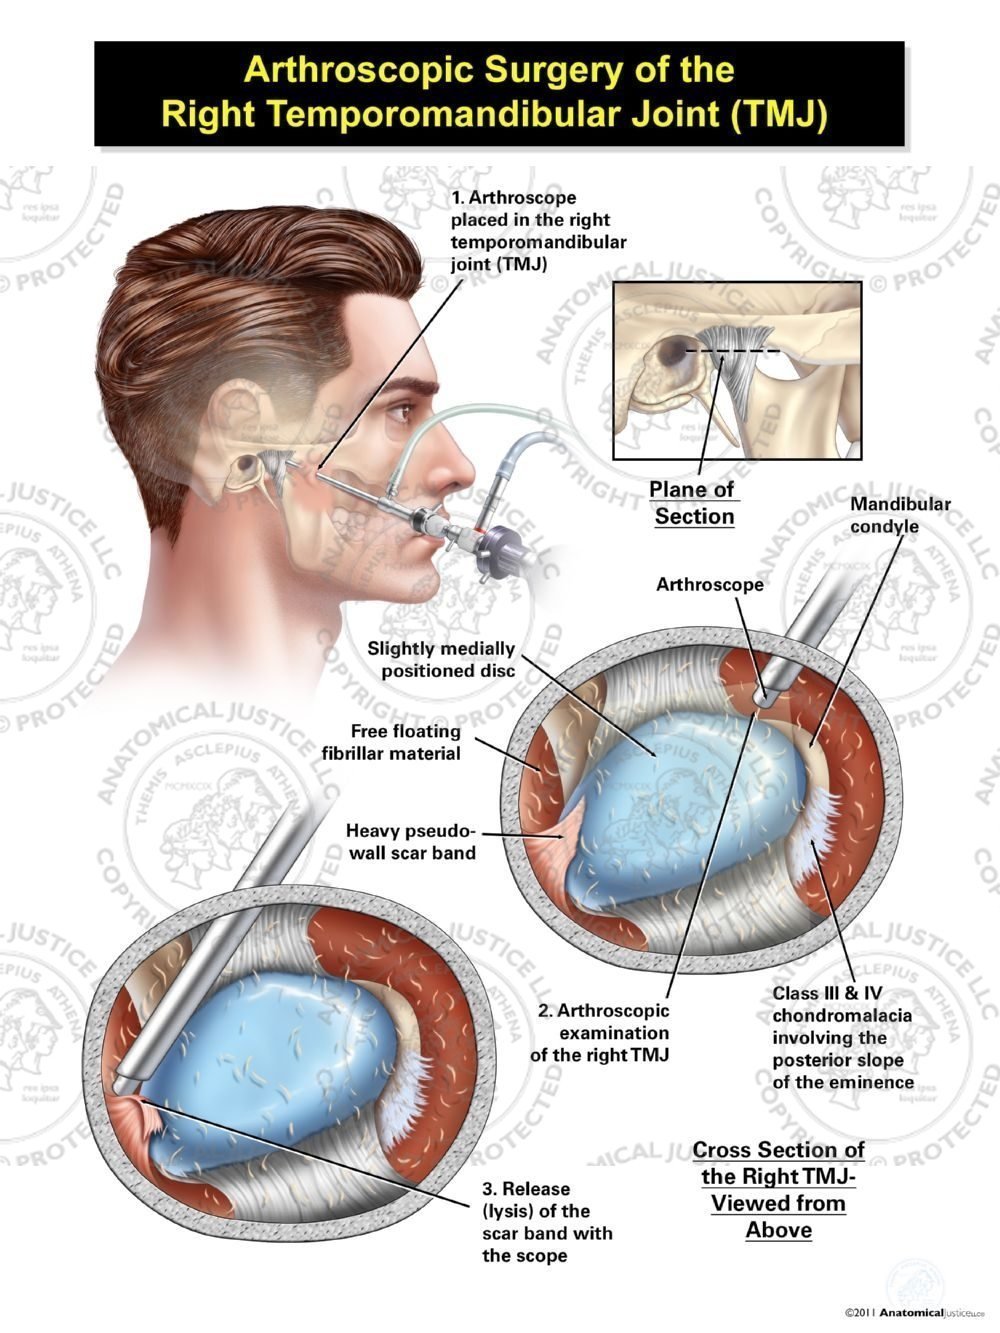 Male Arthroscopic Surgery of the Right Temporomandibular Joint (TMJ)